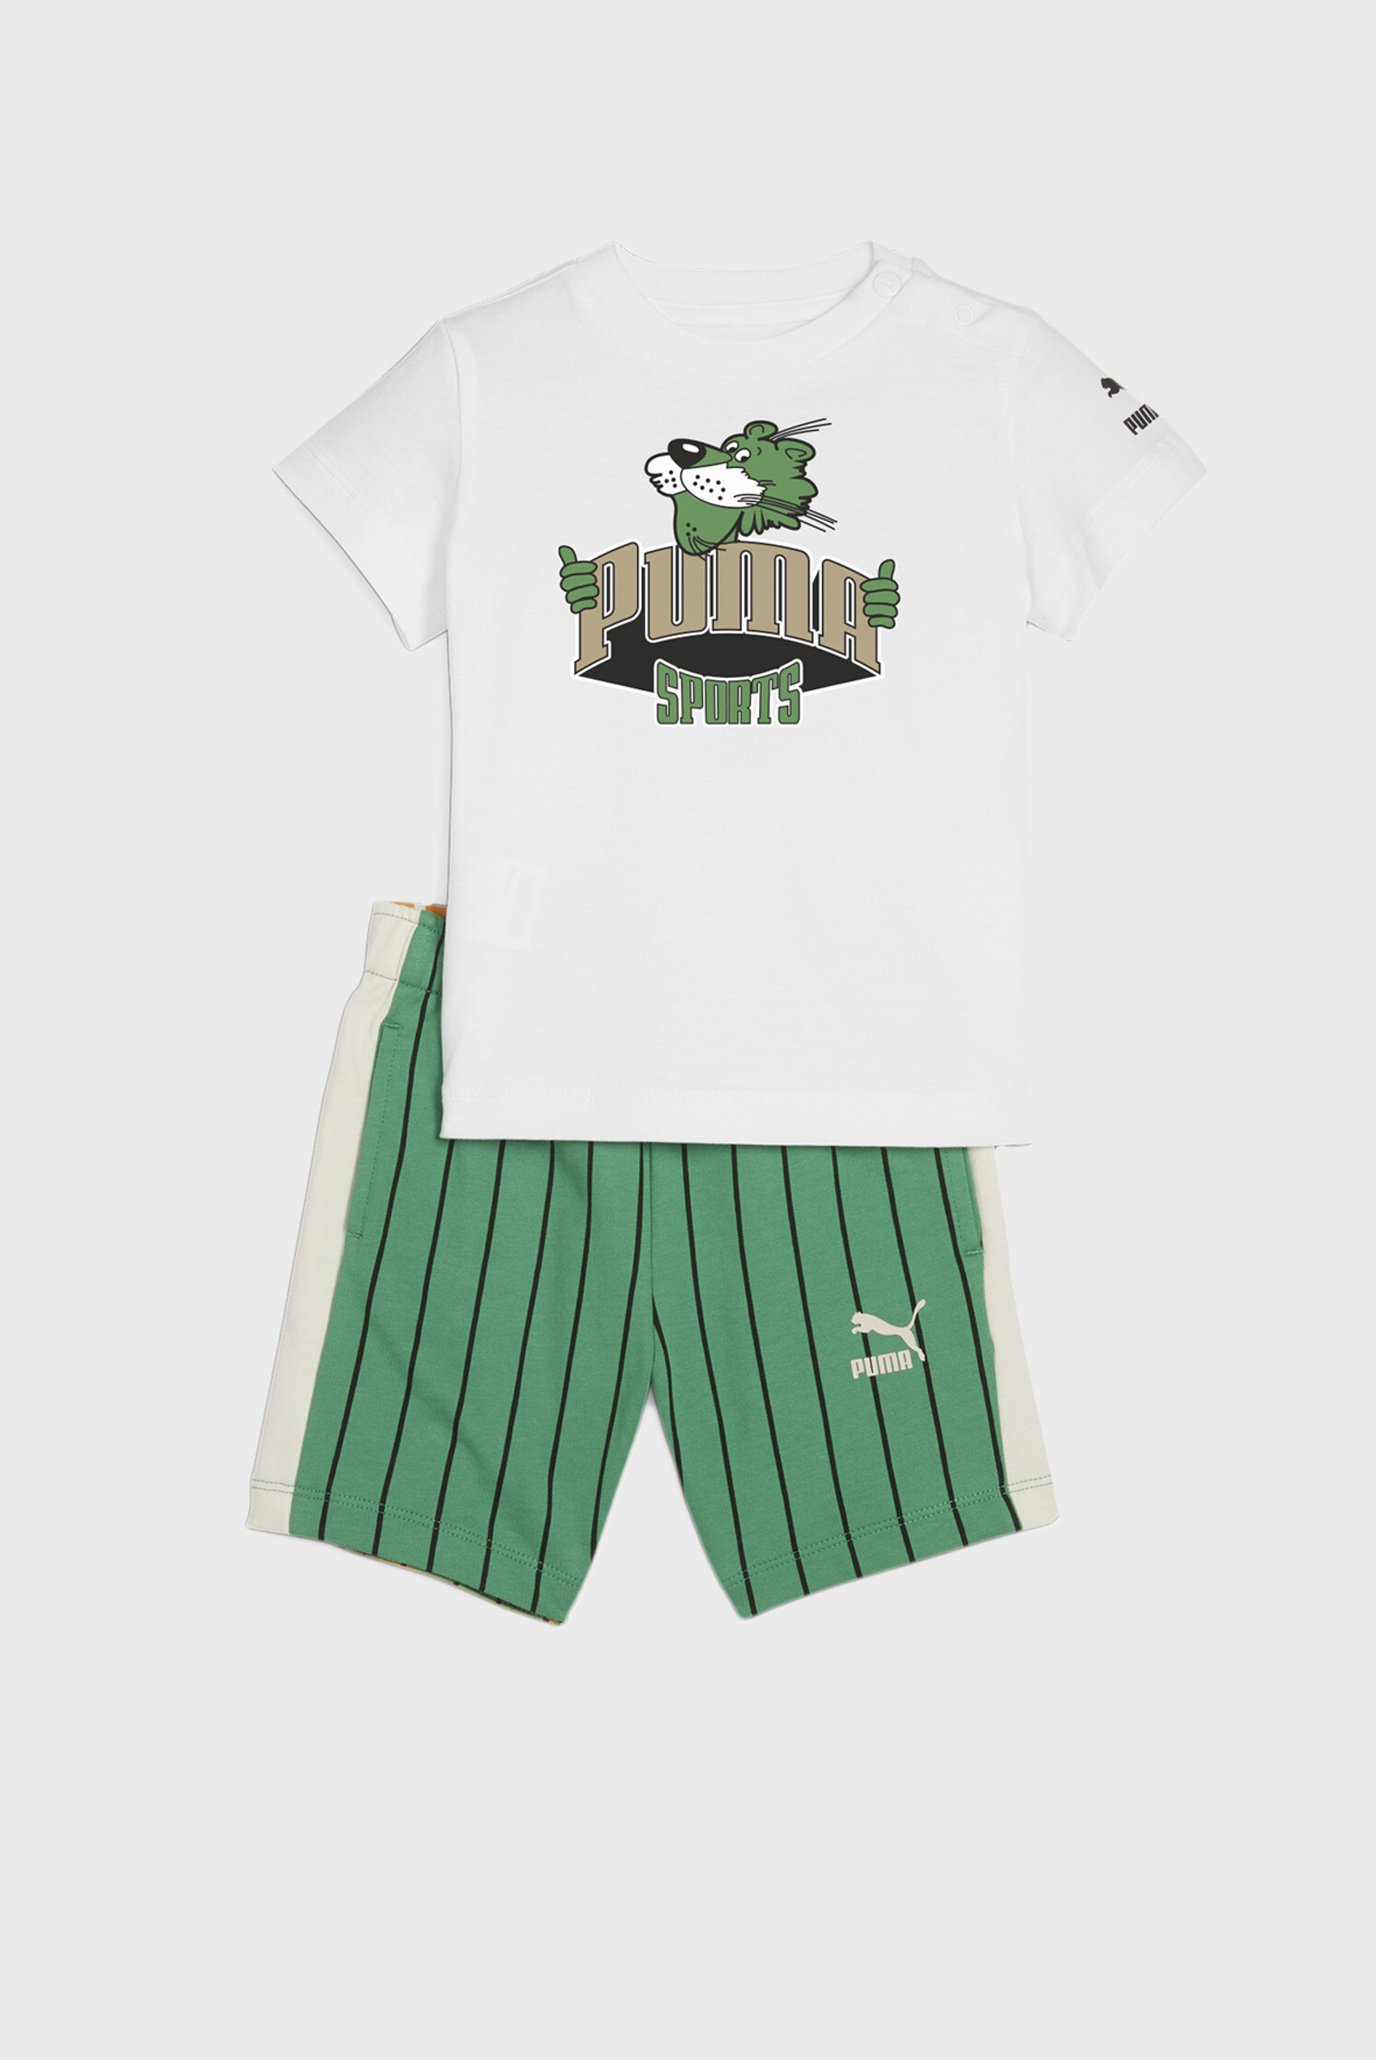 Дитячий спортивний костюм (футболка, шорти) MINICATS FANBASE Toddlers' Set 1